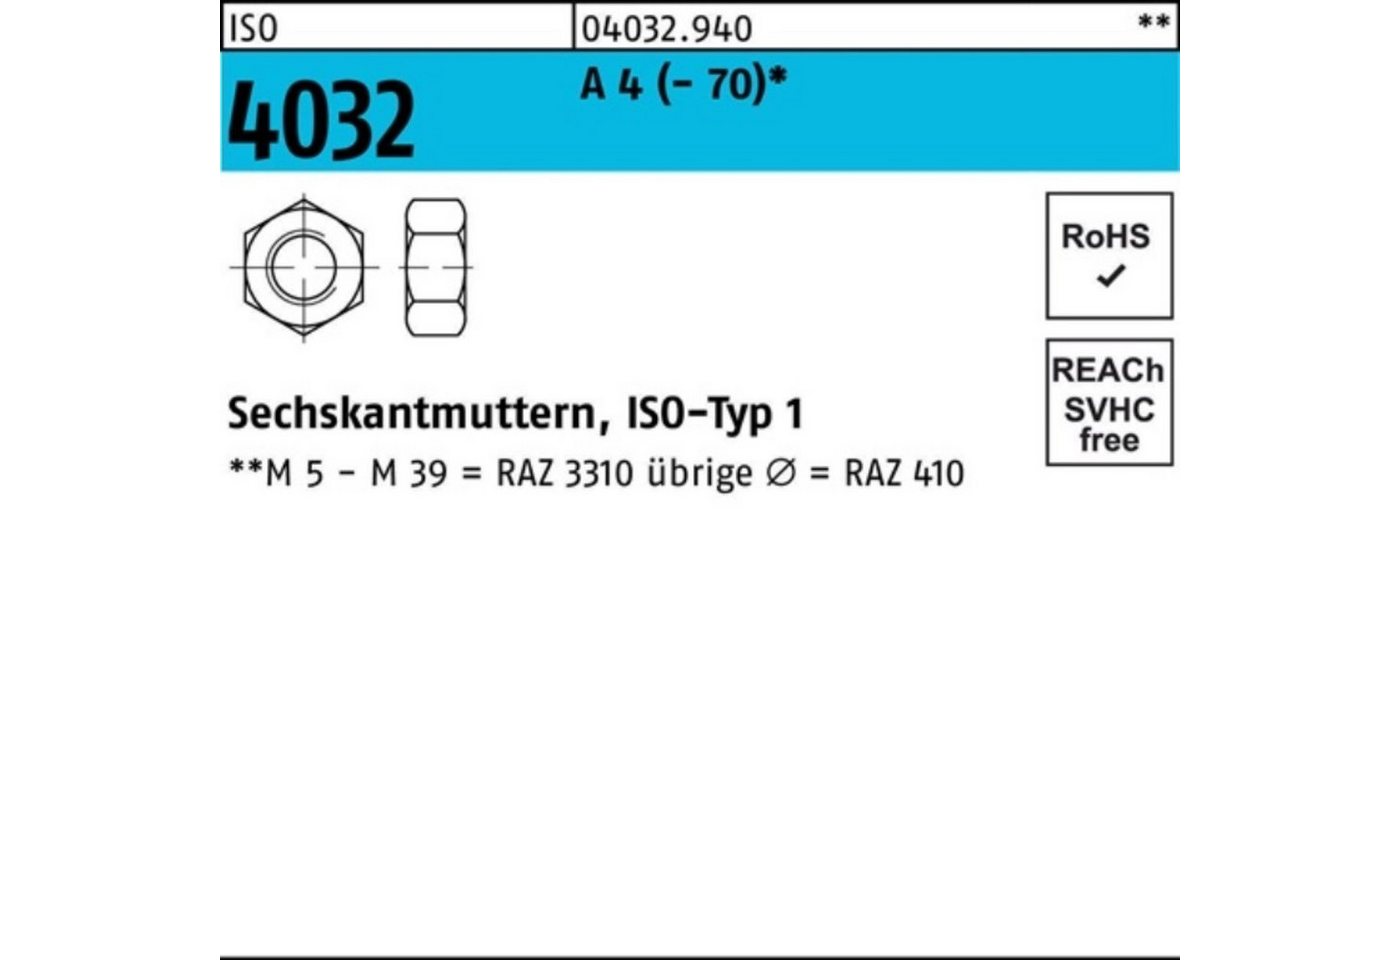 Bufab Muttern 500er Pack Sechskantmutter ISO 4032 M8 A 4 (70) 500 Stück ISO 4032 von Bufab